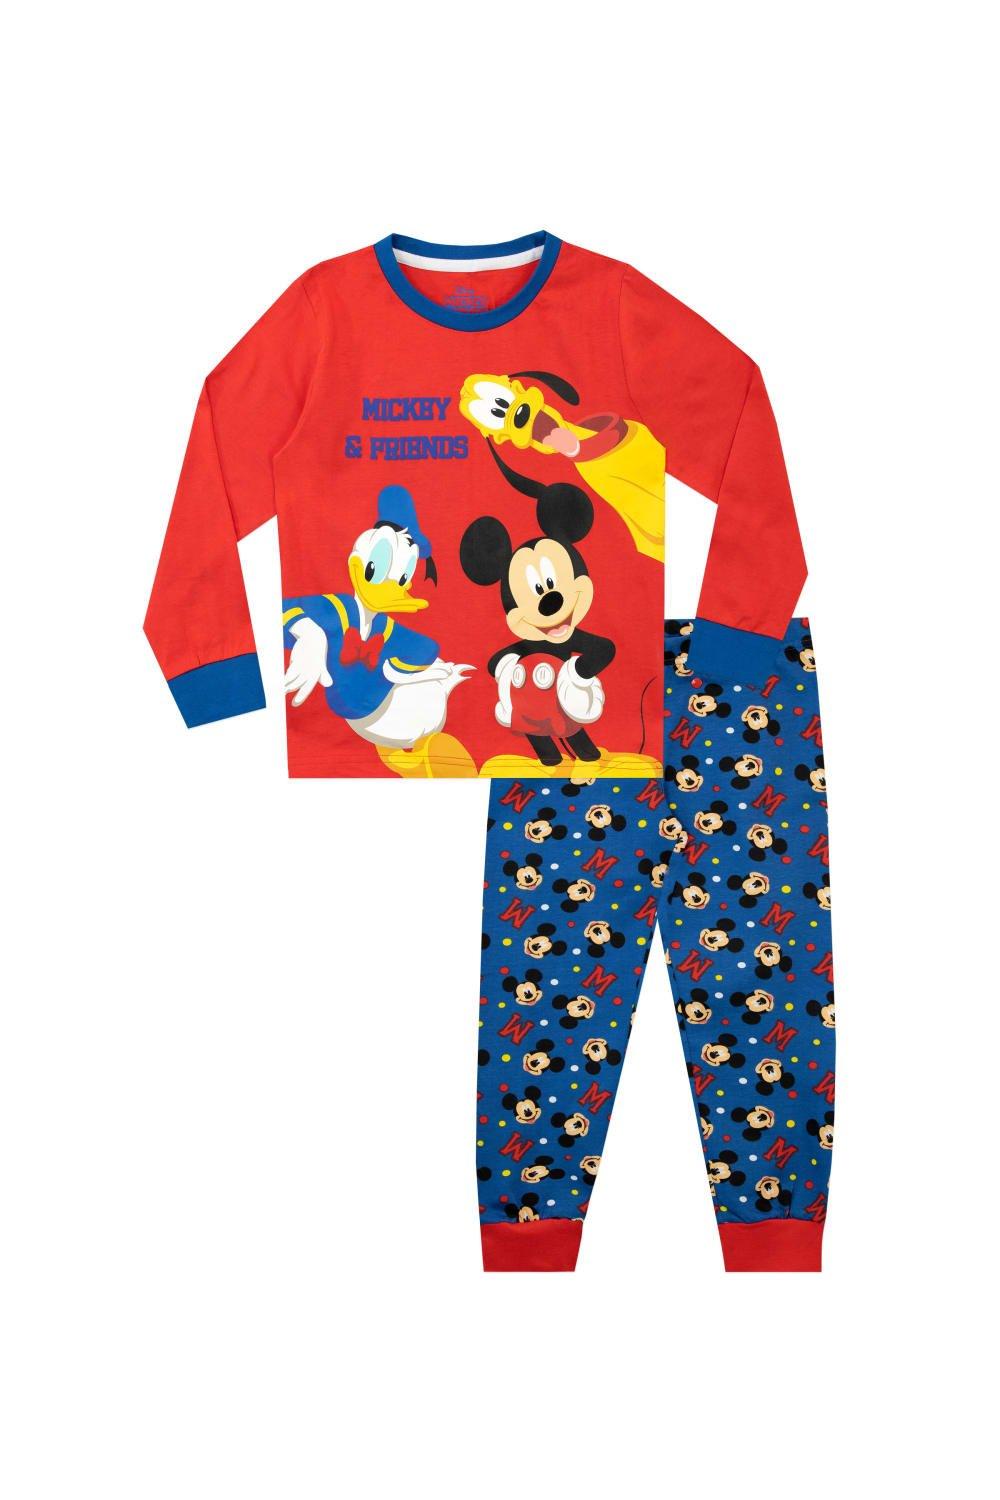 Mickey Mouse Donald Duck and Pluto Pyjamas